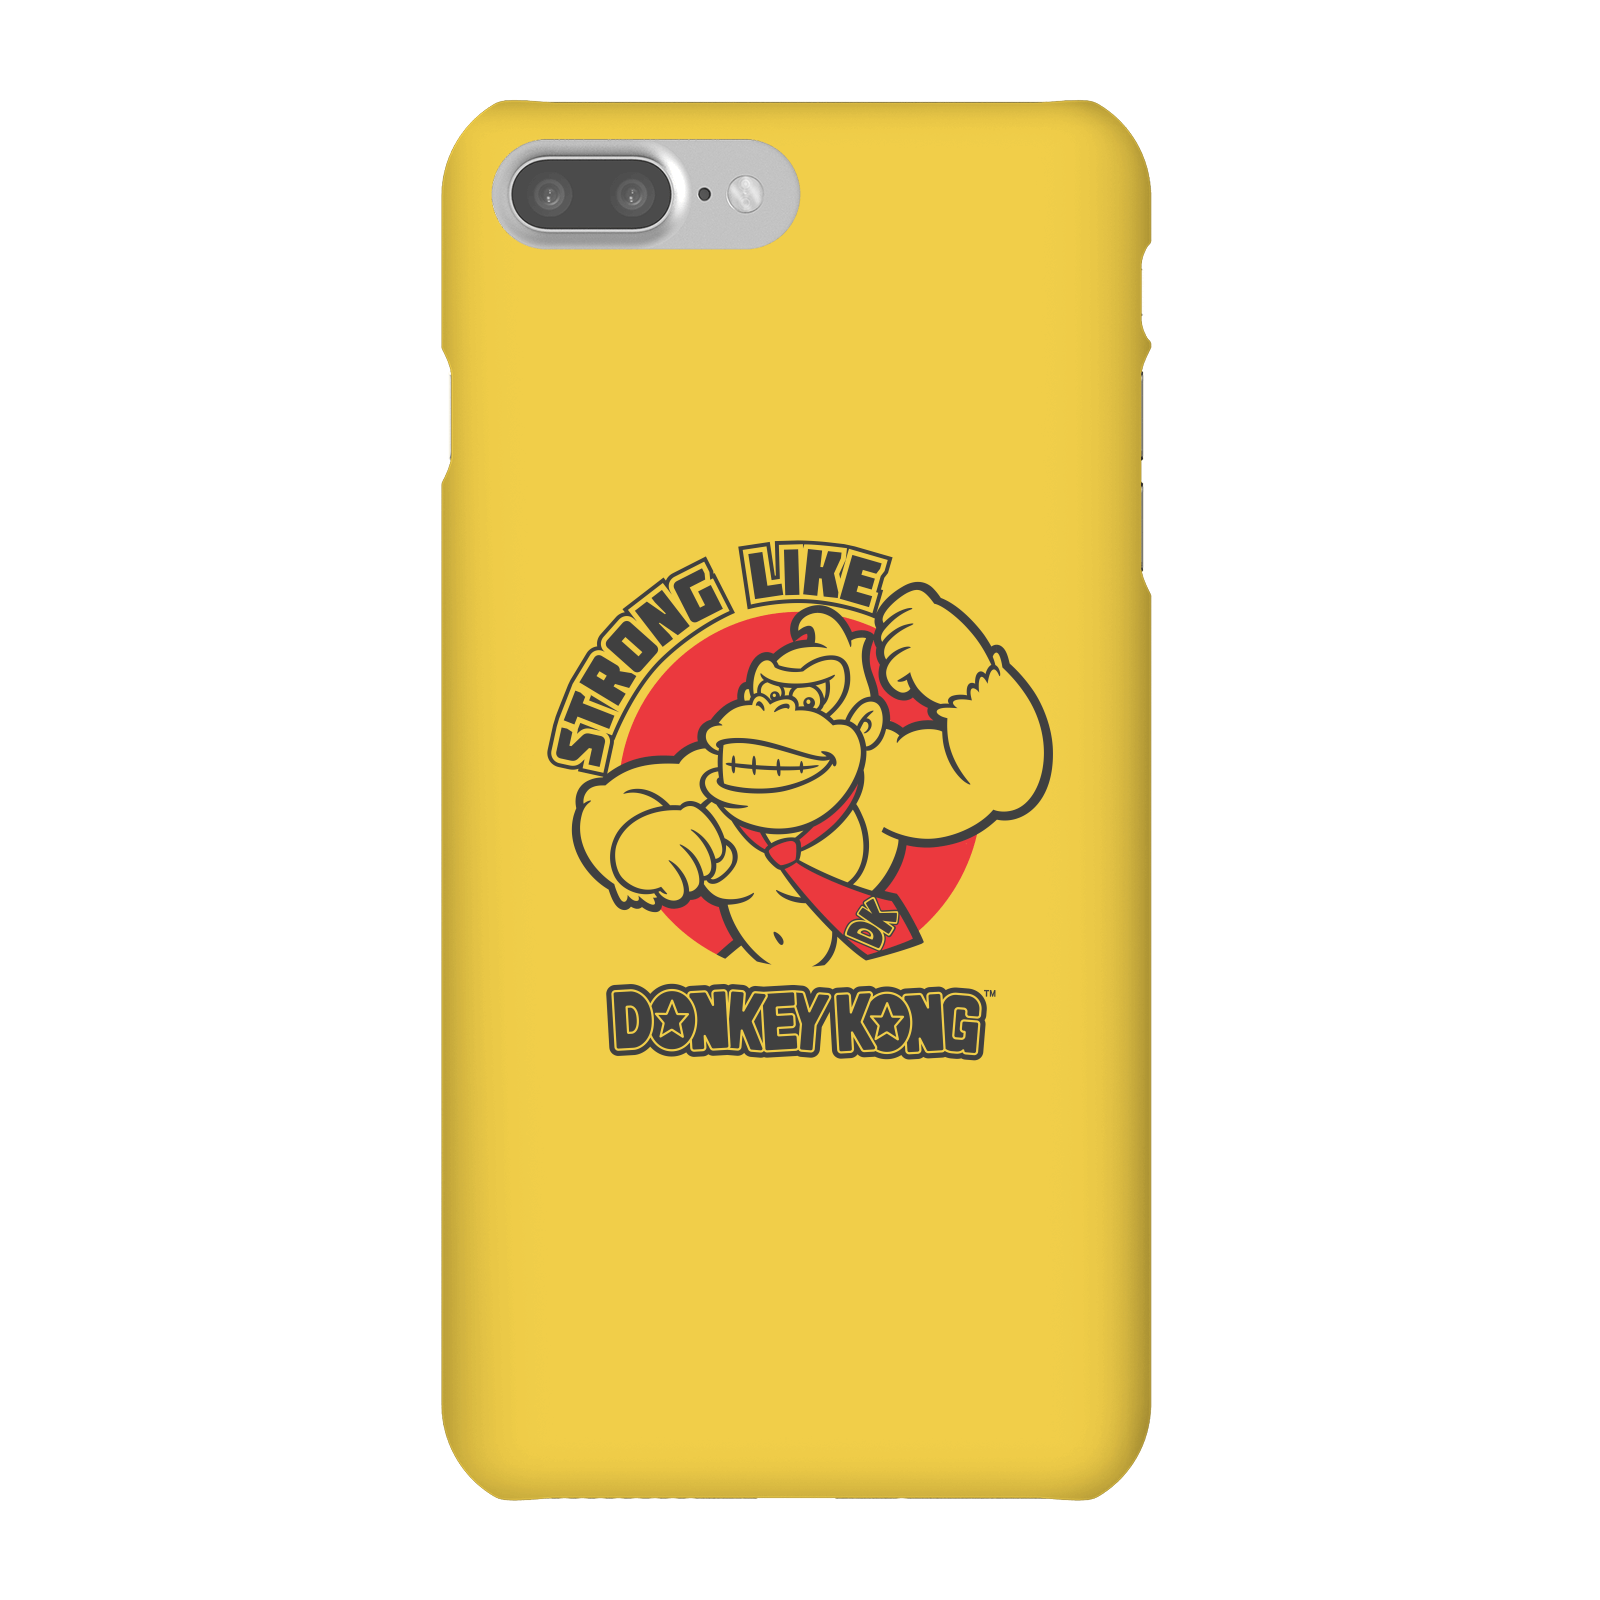 Nintendo Donkey Kong Strong Like Donkey Kong Phone Case - iPhone 7 Plus - Snap Case - Gloss